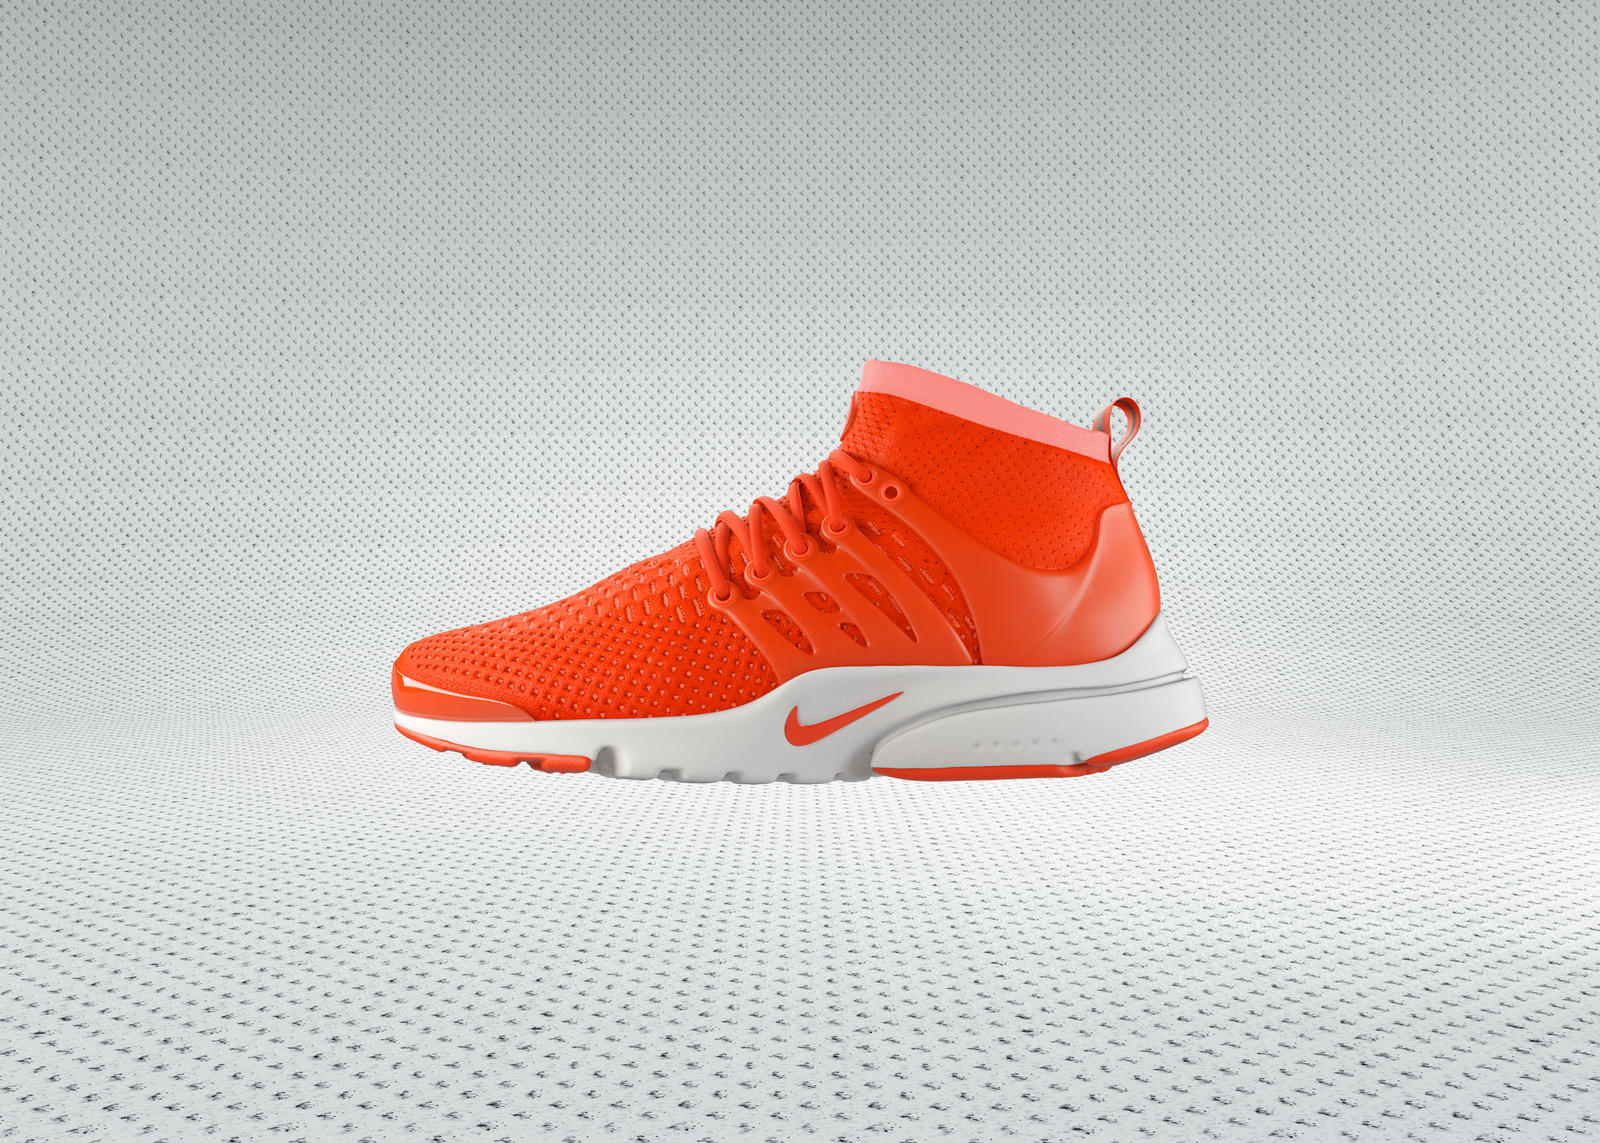 Nike_Air_Presto_Ultra_Flyknit_6_rectangle_1600